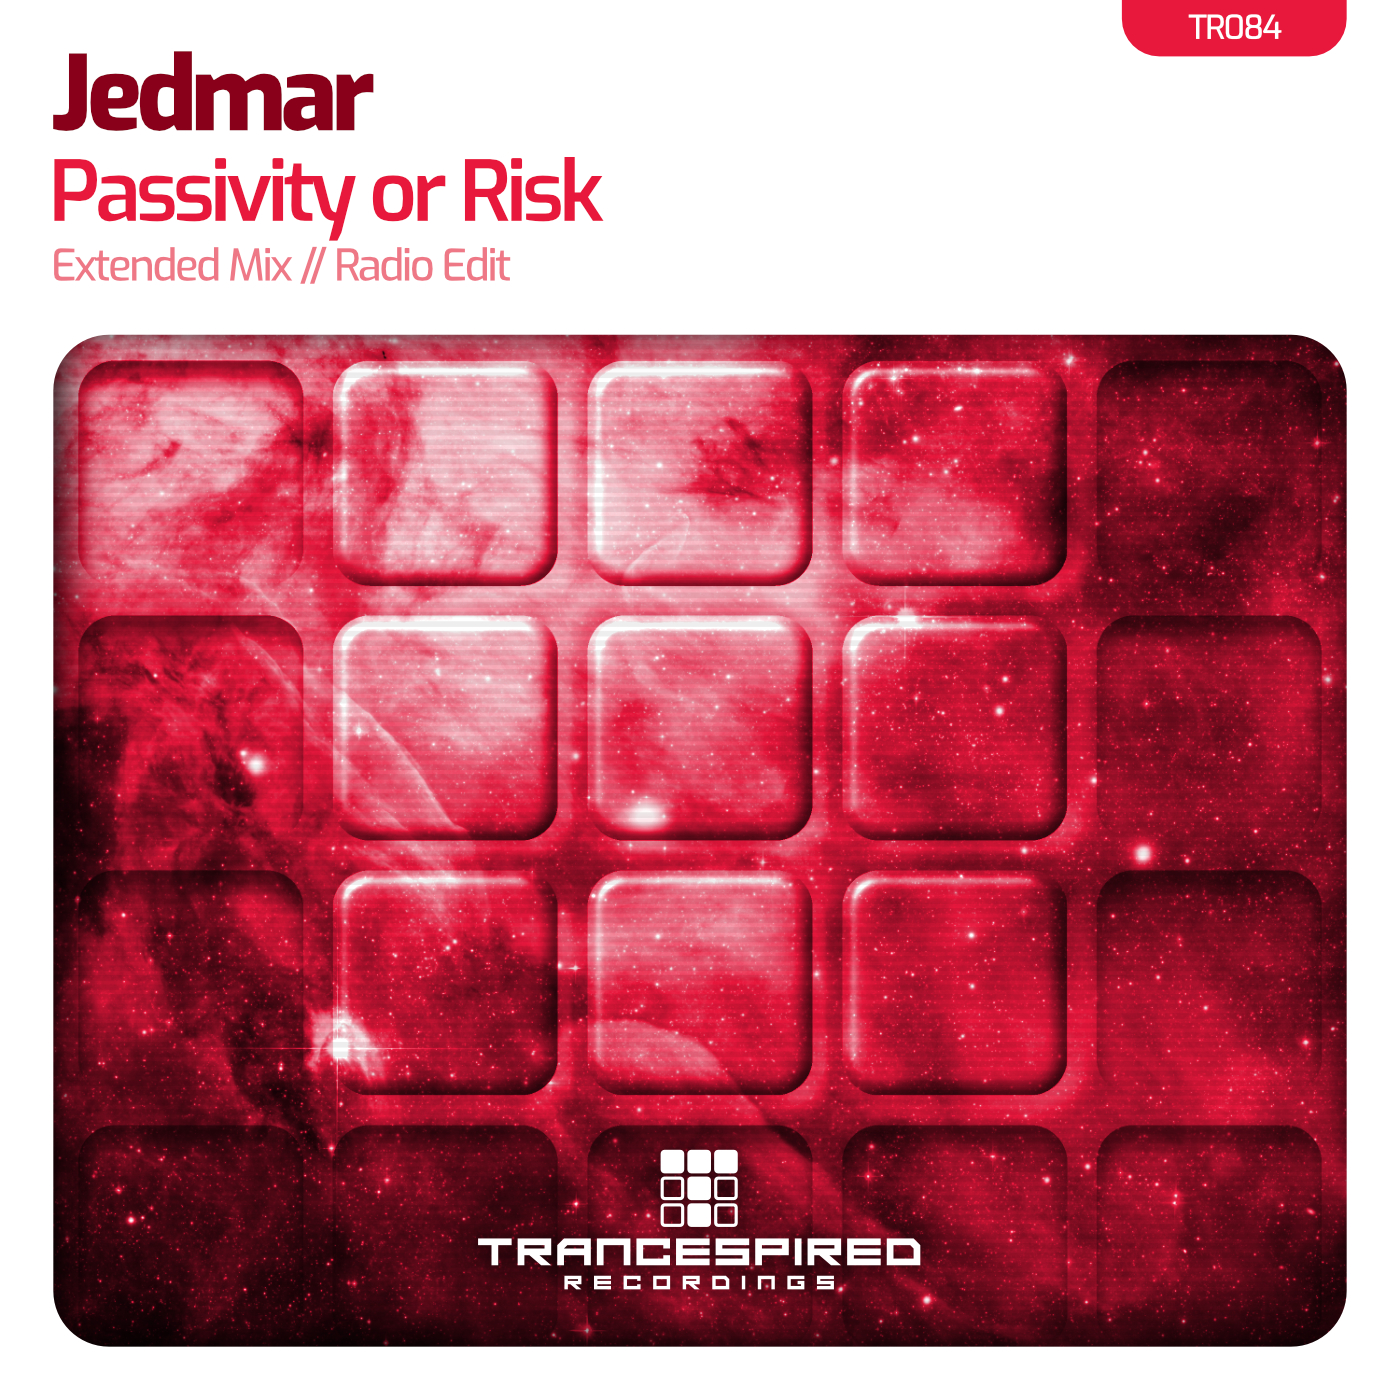 Jedmar presents Passivity or Risk on Trancespired Recordings